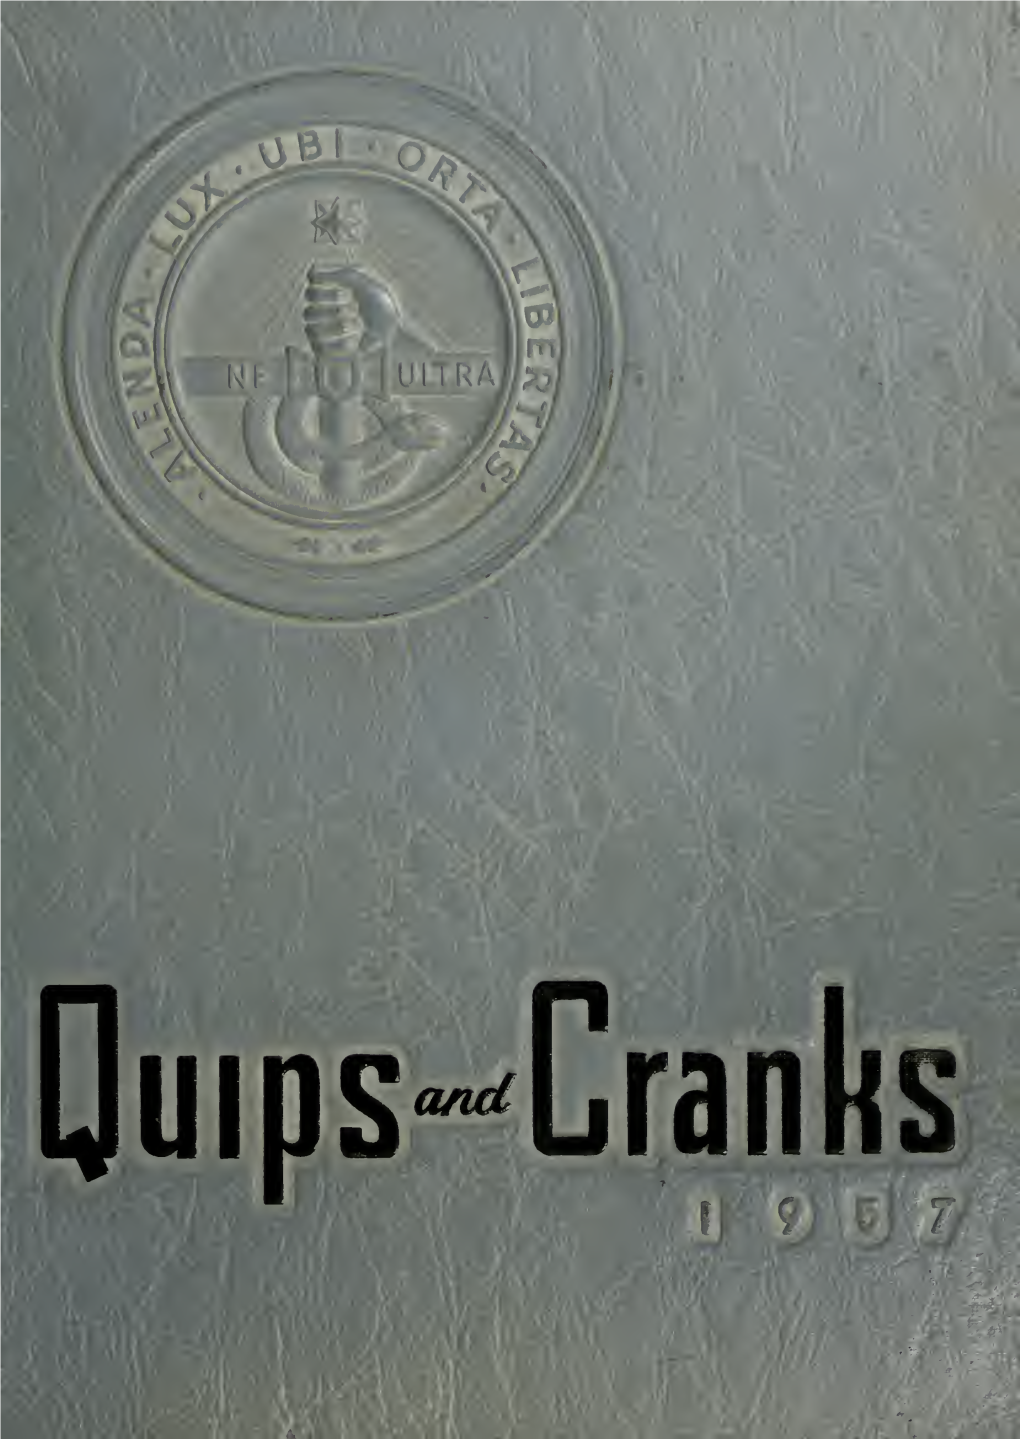 Davidson College Yearbook, Quips and Cranks, 1957